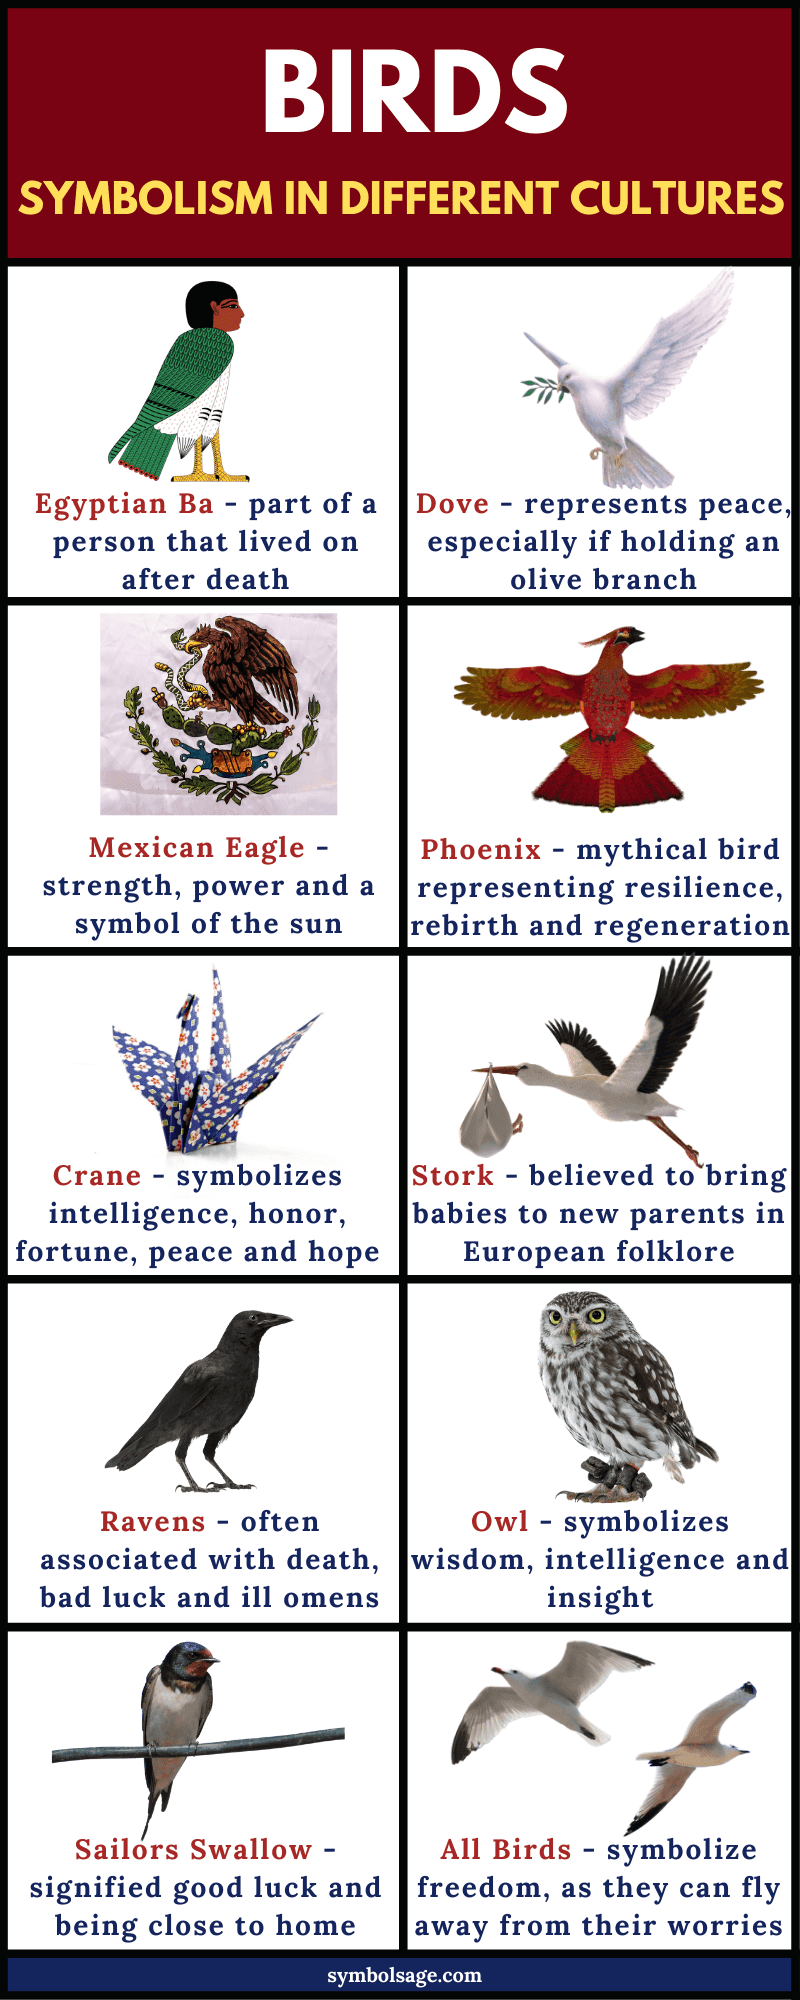 Symbolism of birds in different cultures